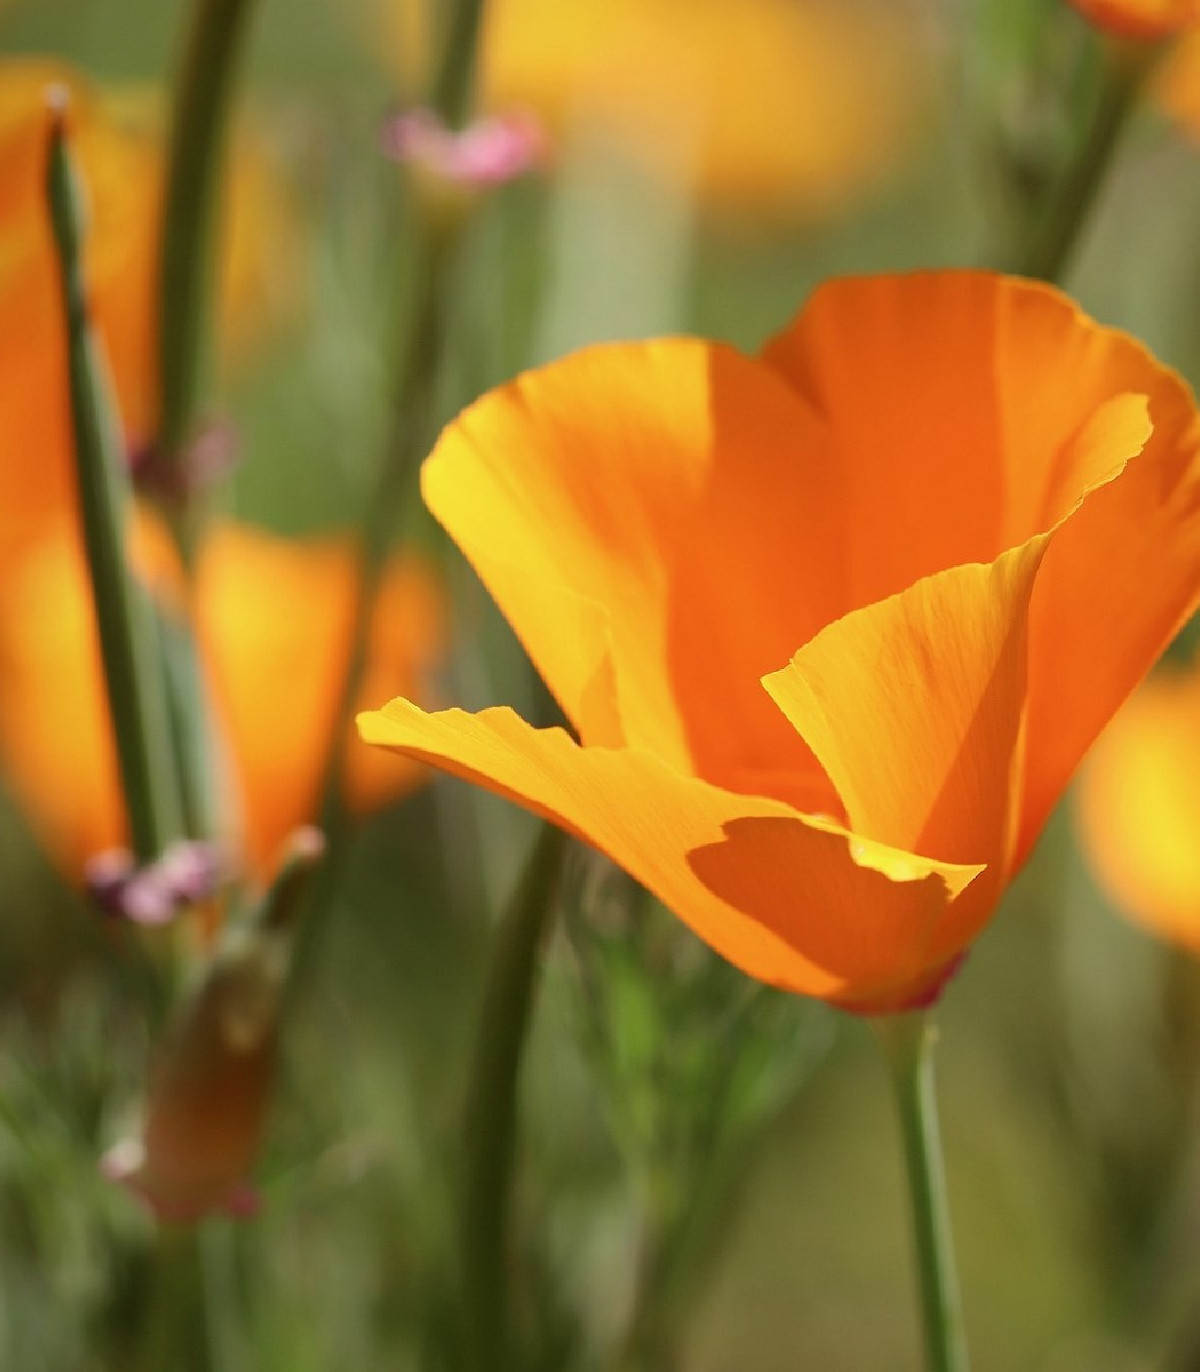 Sluncovka kalifornská oranžová - Eschscholzia californica - prodej semen - 450 ks